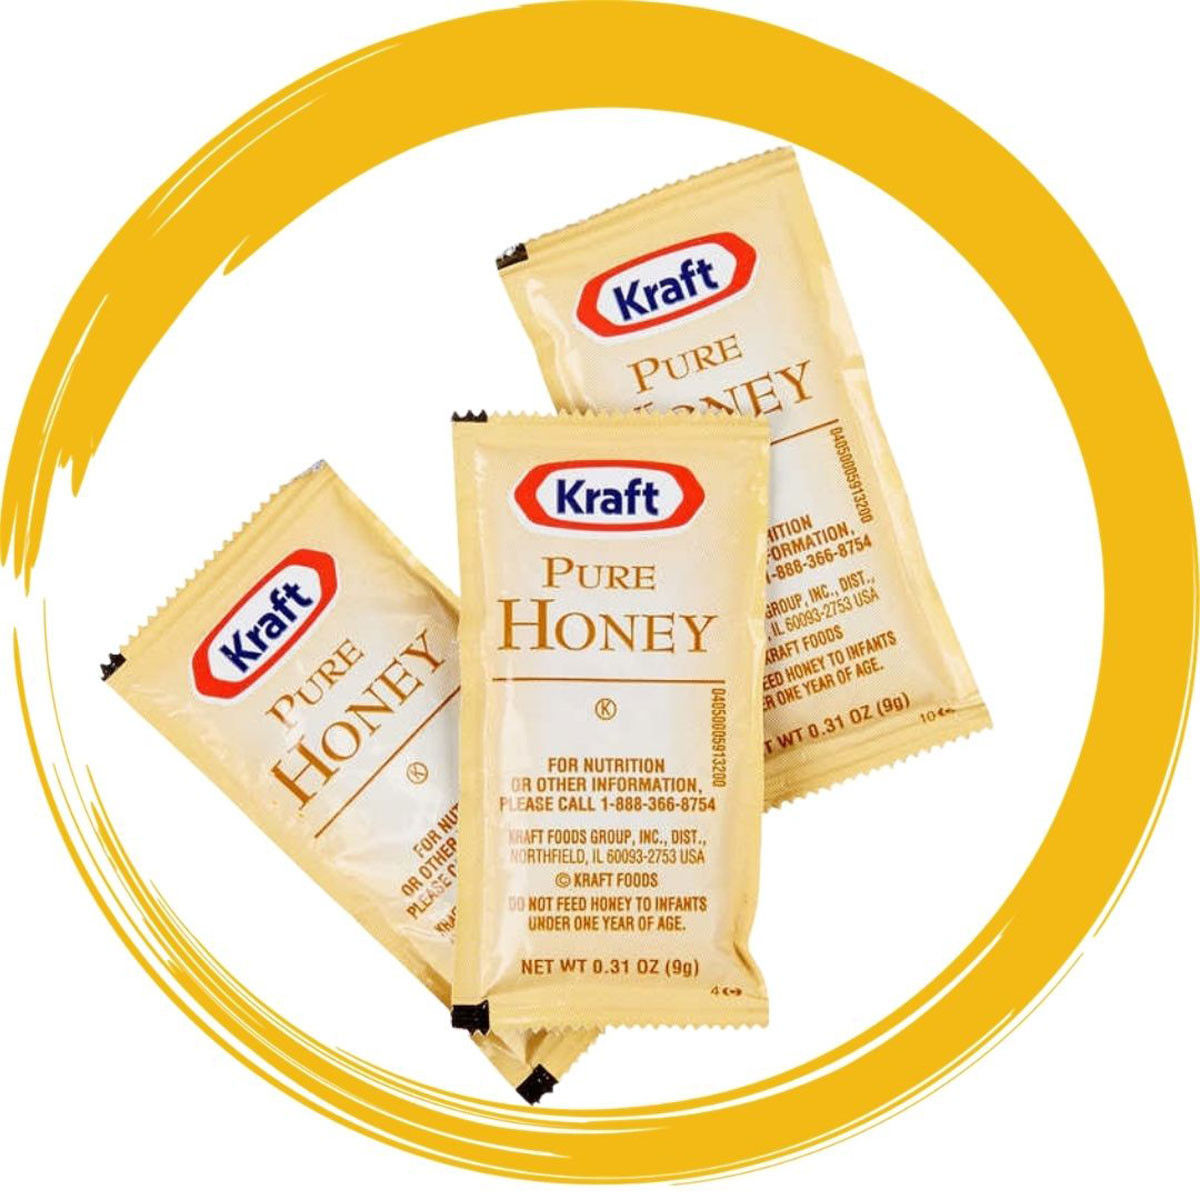 Is Kraft pure honey real honey?